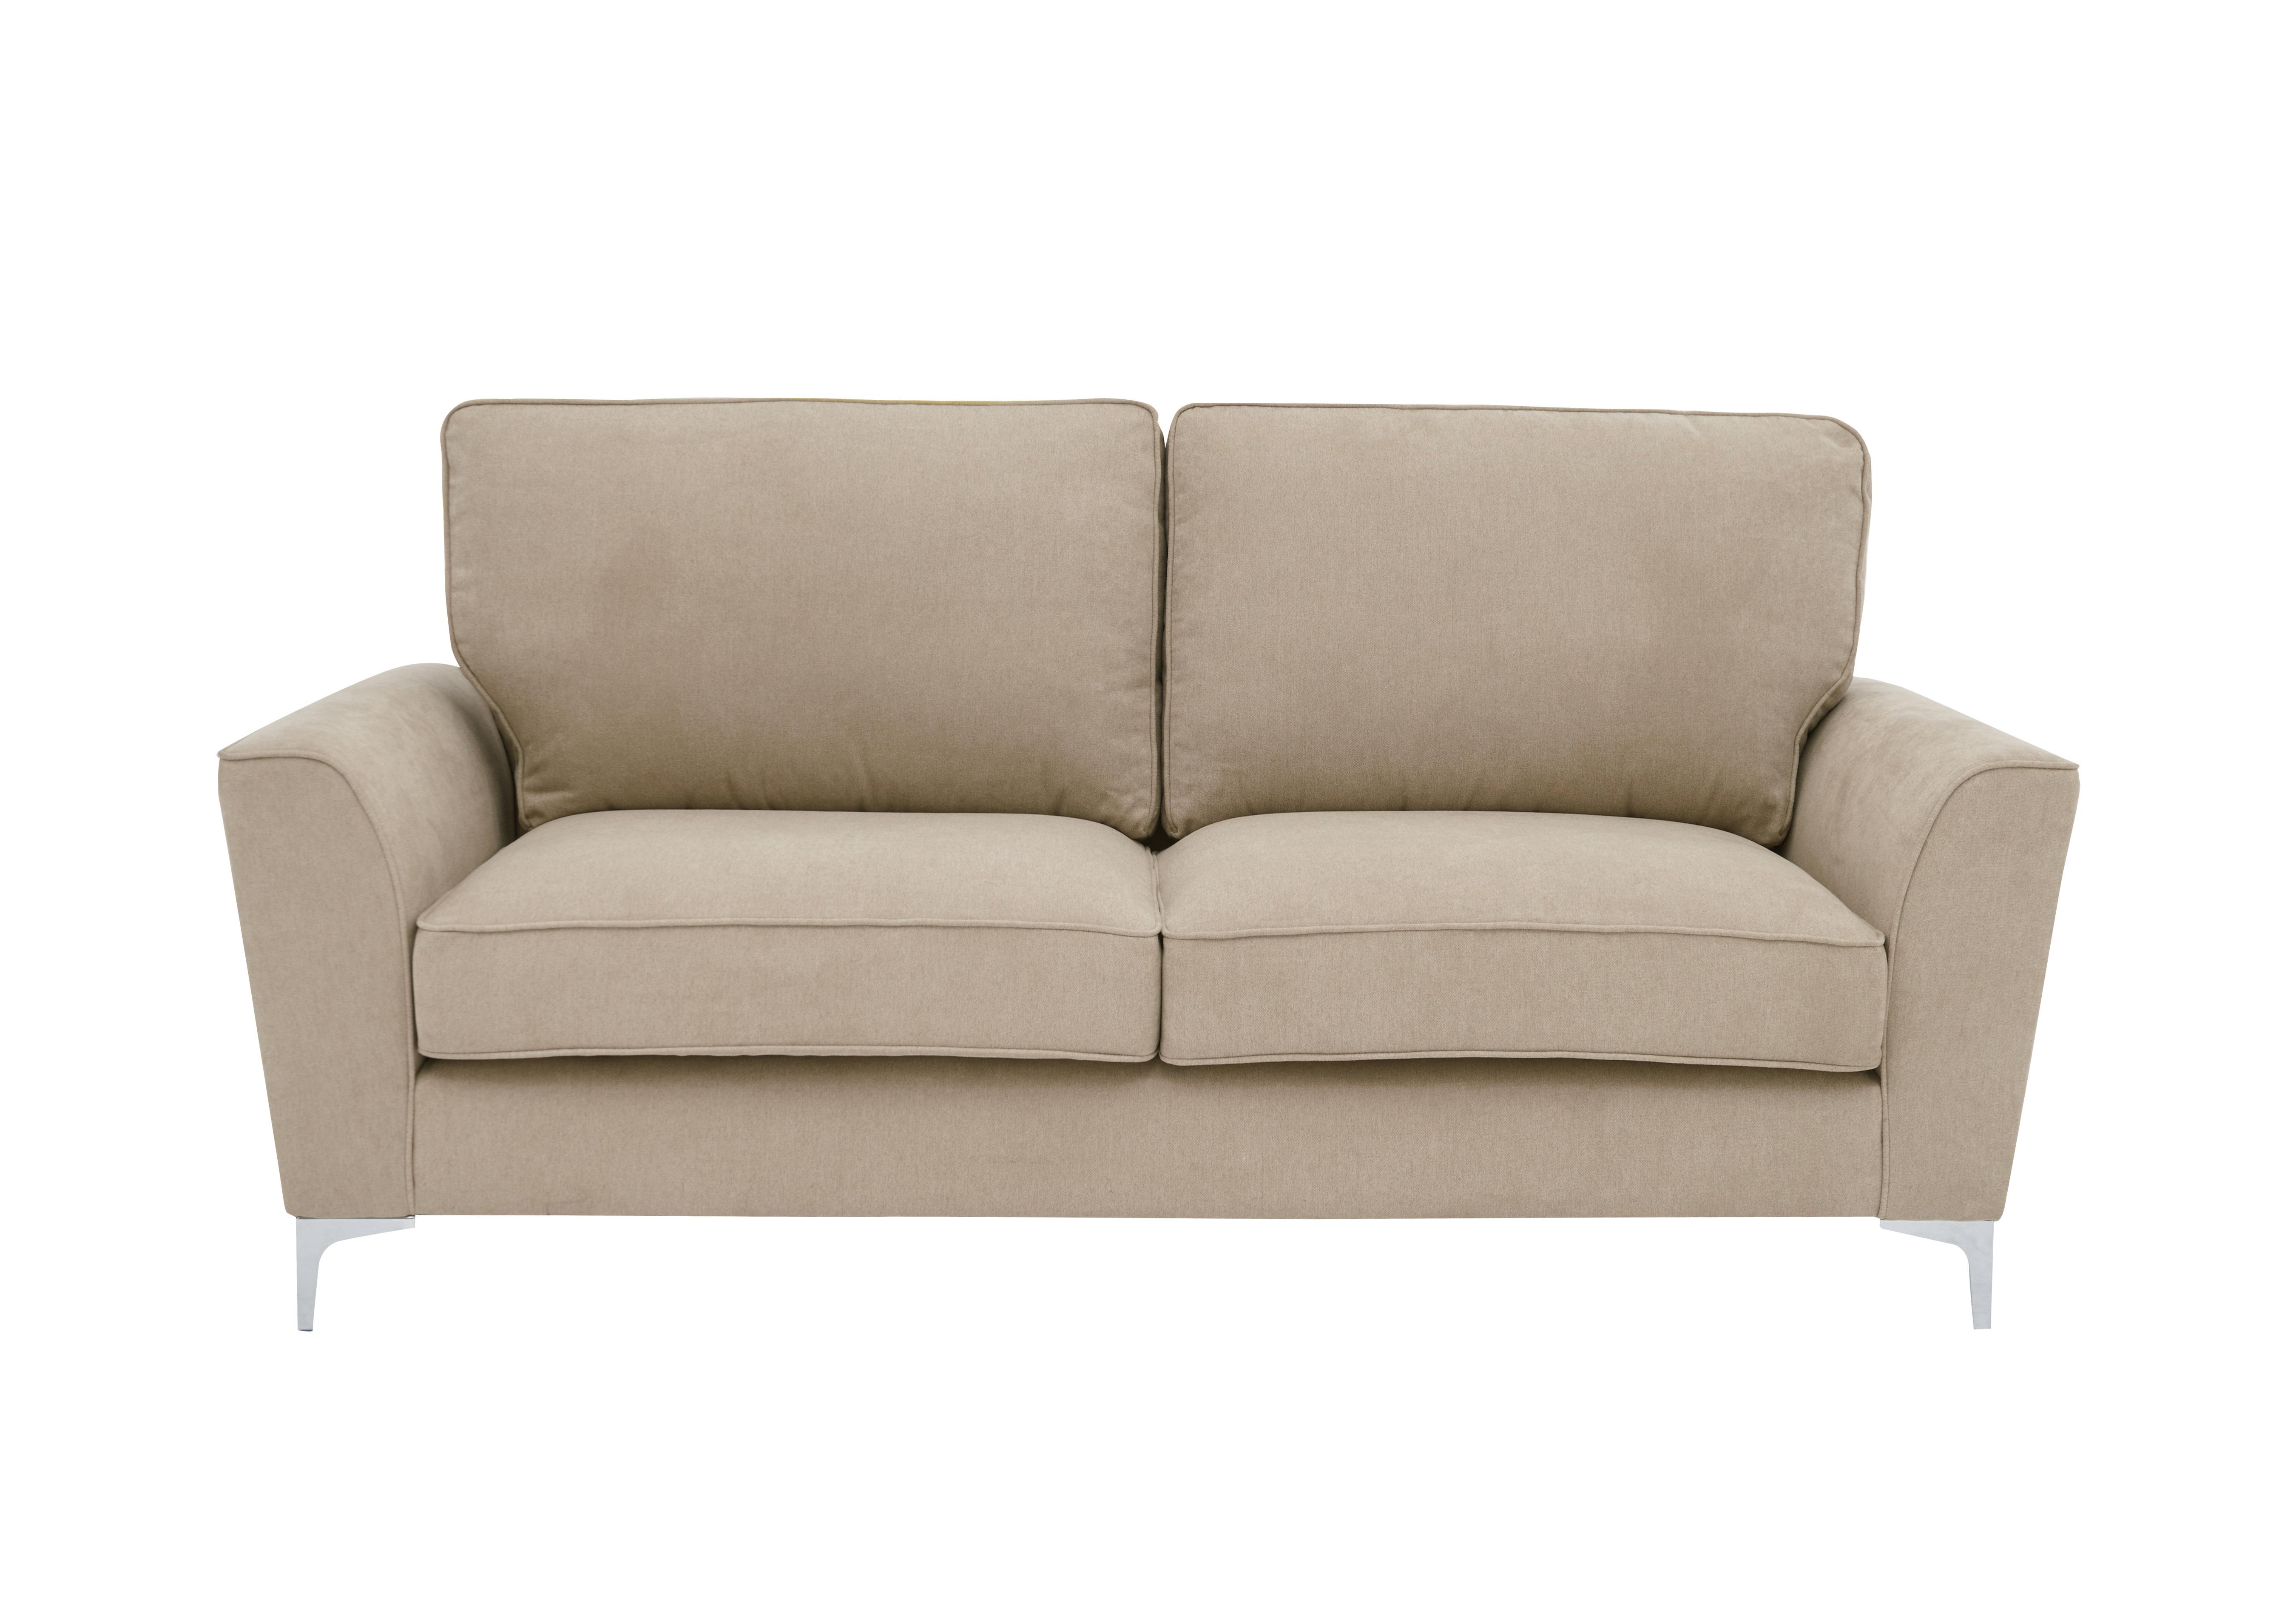 Legend 3 Seater Classic Back Fabric Sofa in Kingston Beige on Furniture Village